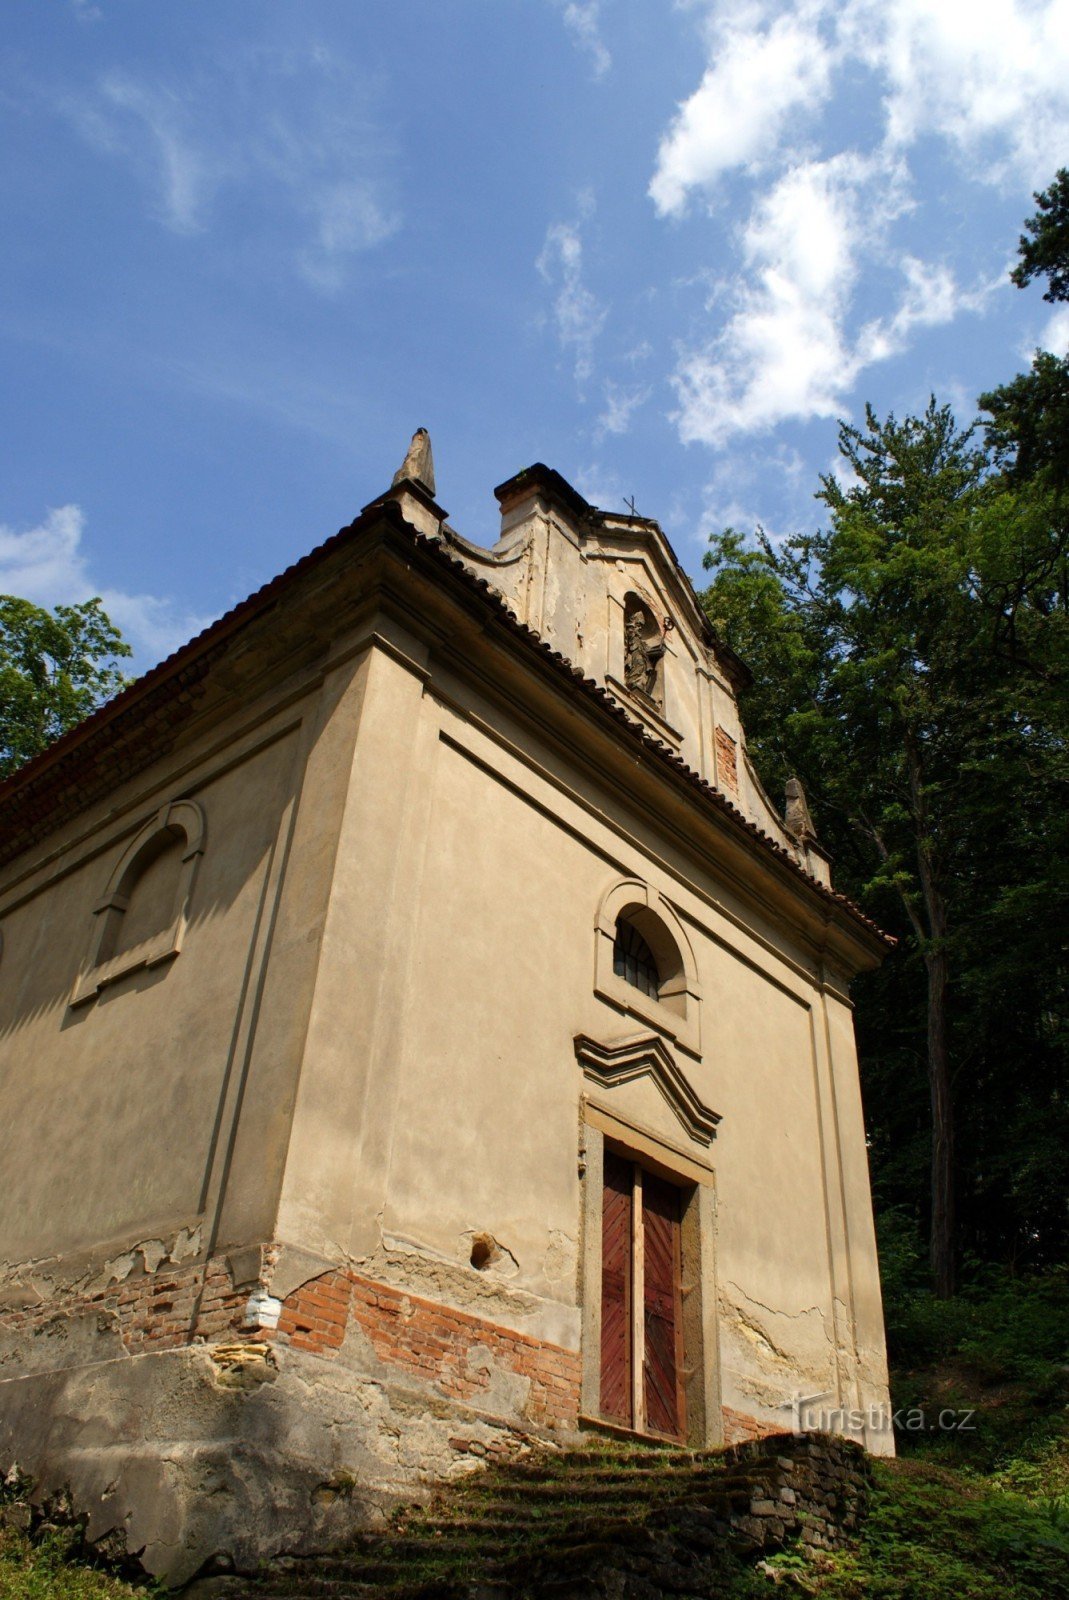 the chapel of S. Vojtěcha